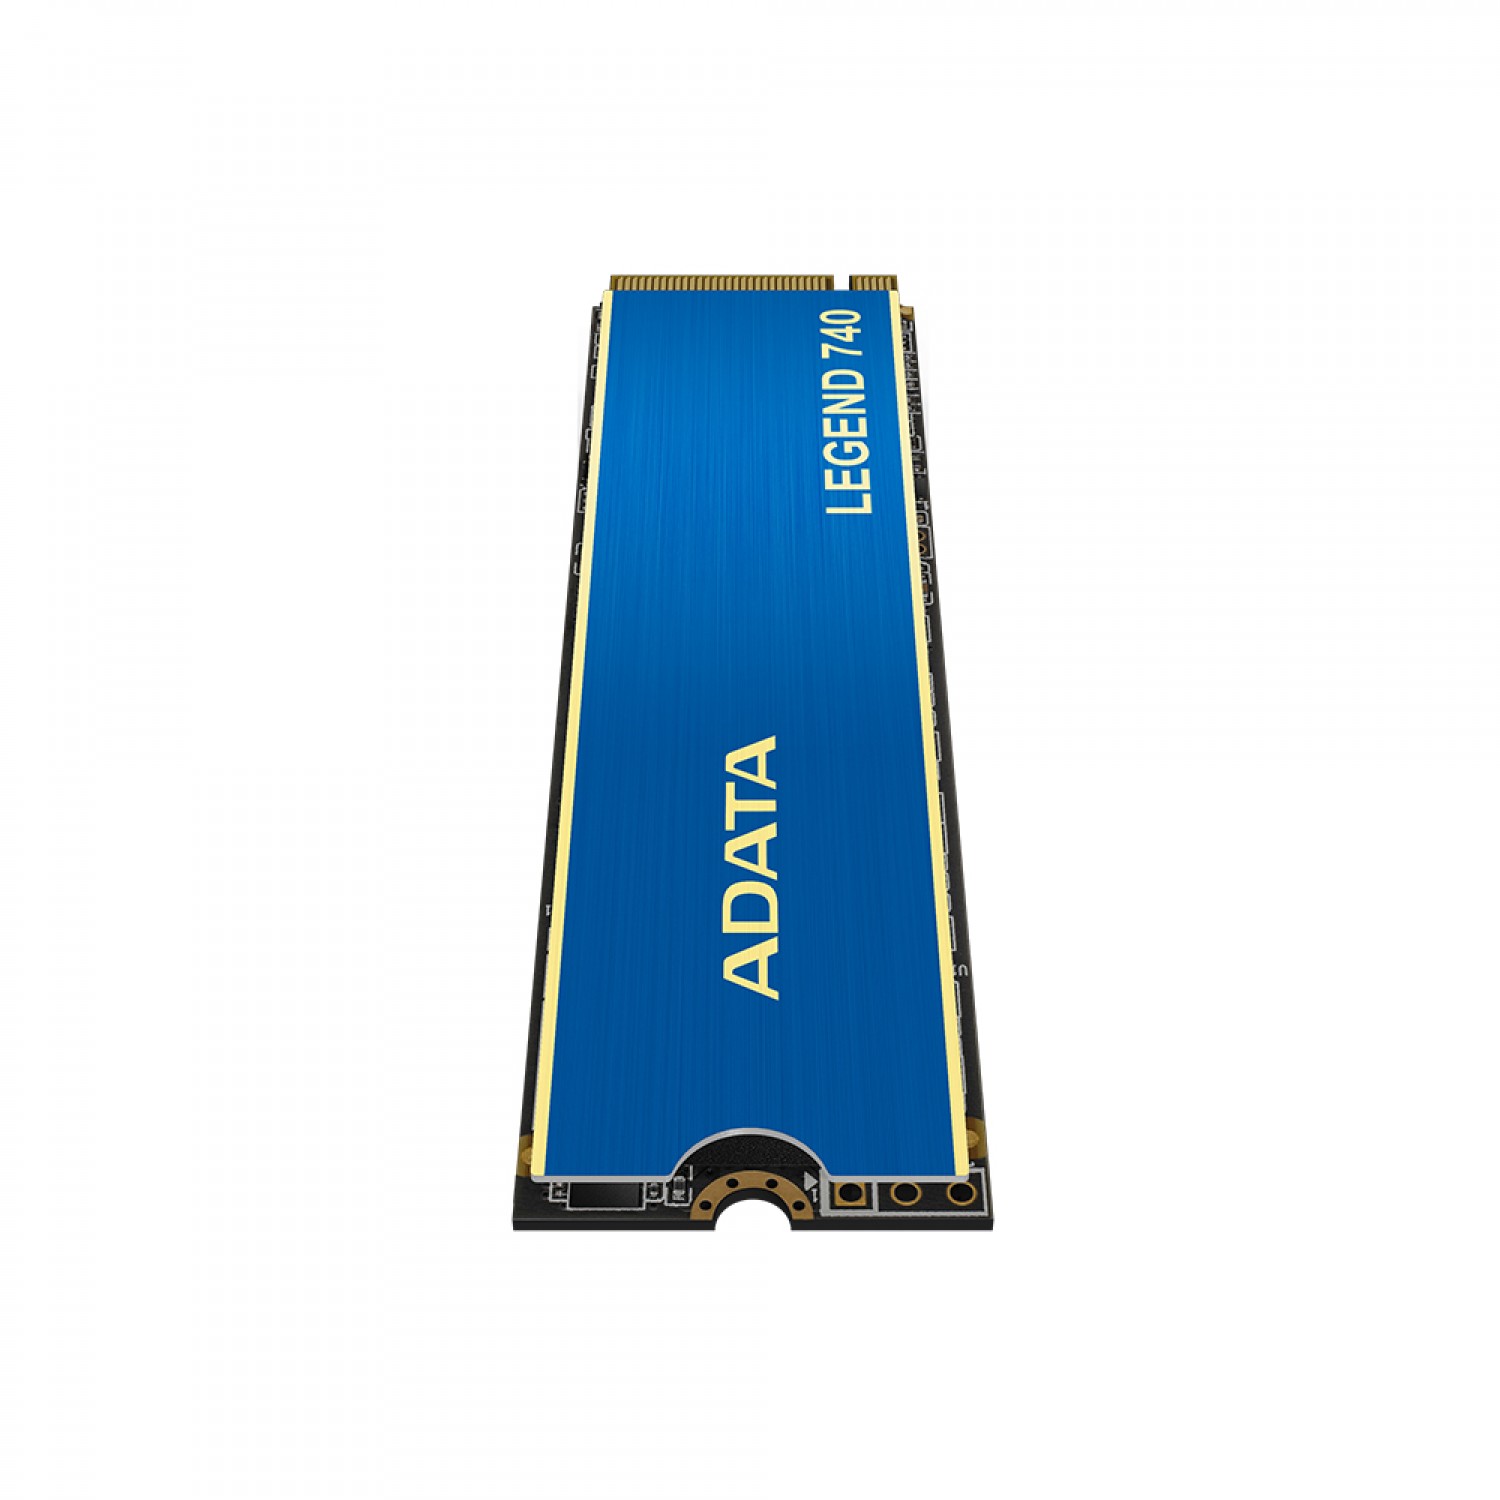 حافظه اس اس دی ADATA Legend 740 500GB-4